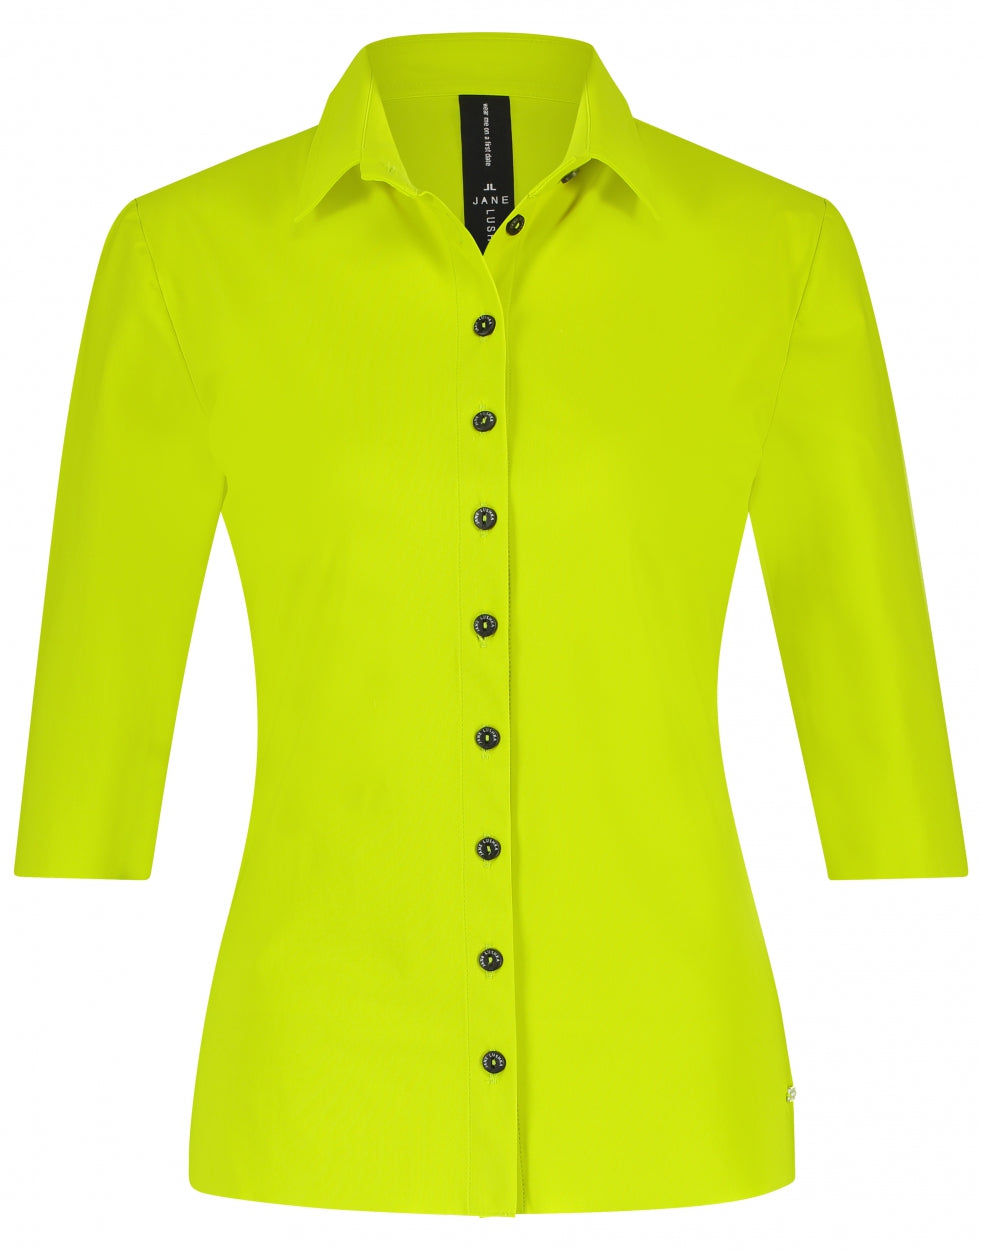 Debbie Shirt | Yellow